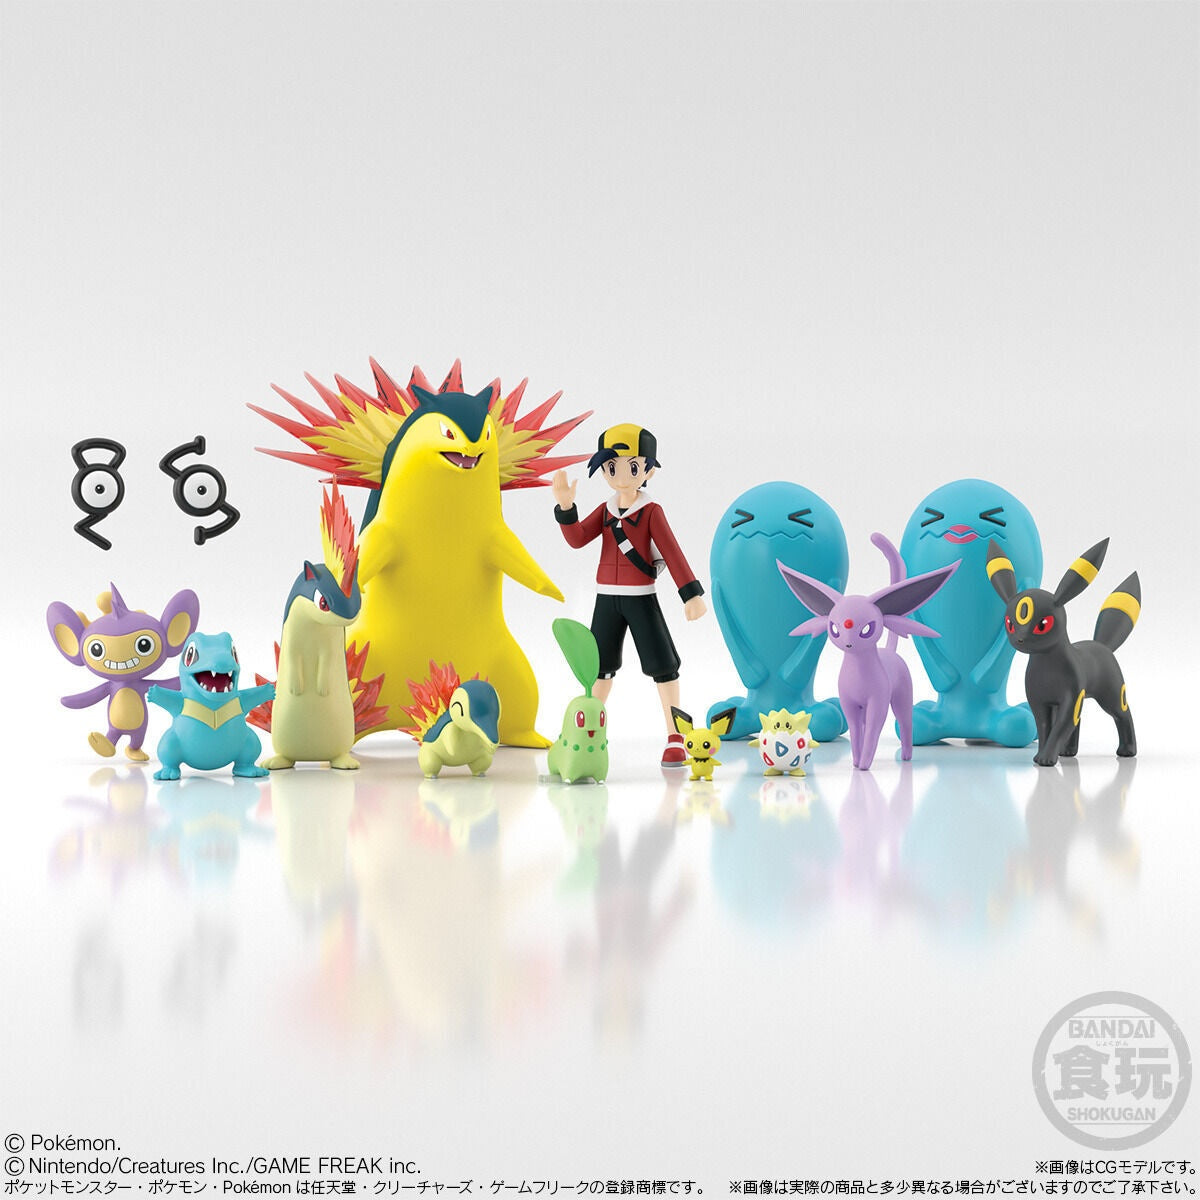 Bandai - Shokugan - Pokemon Scale World Johto Region Set (Reissue) - Marvelous Toys